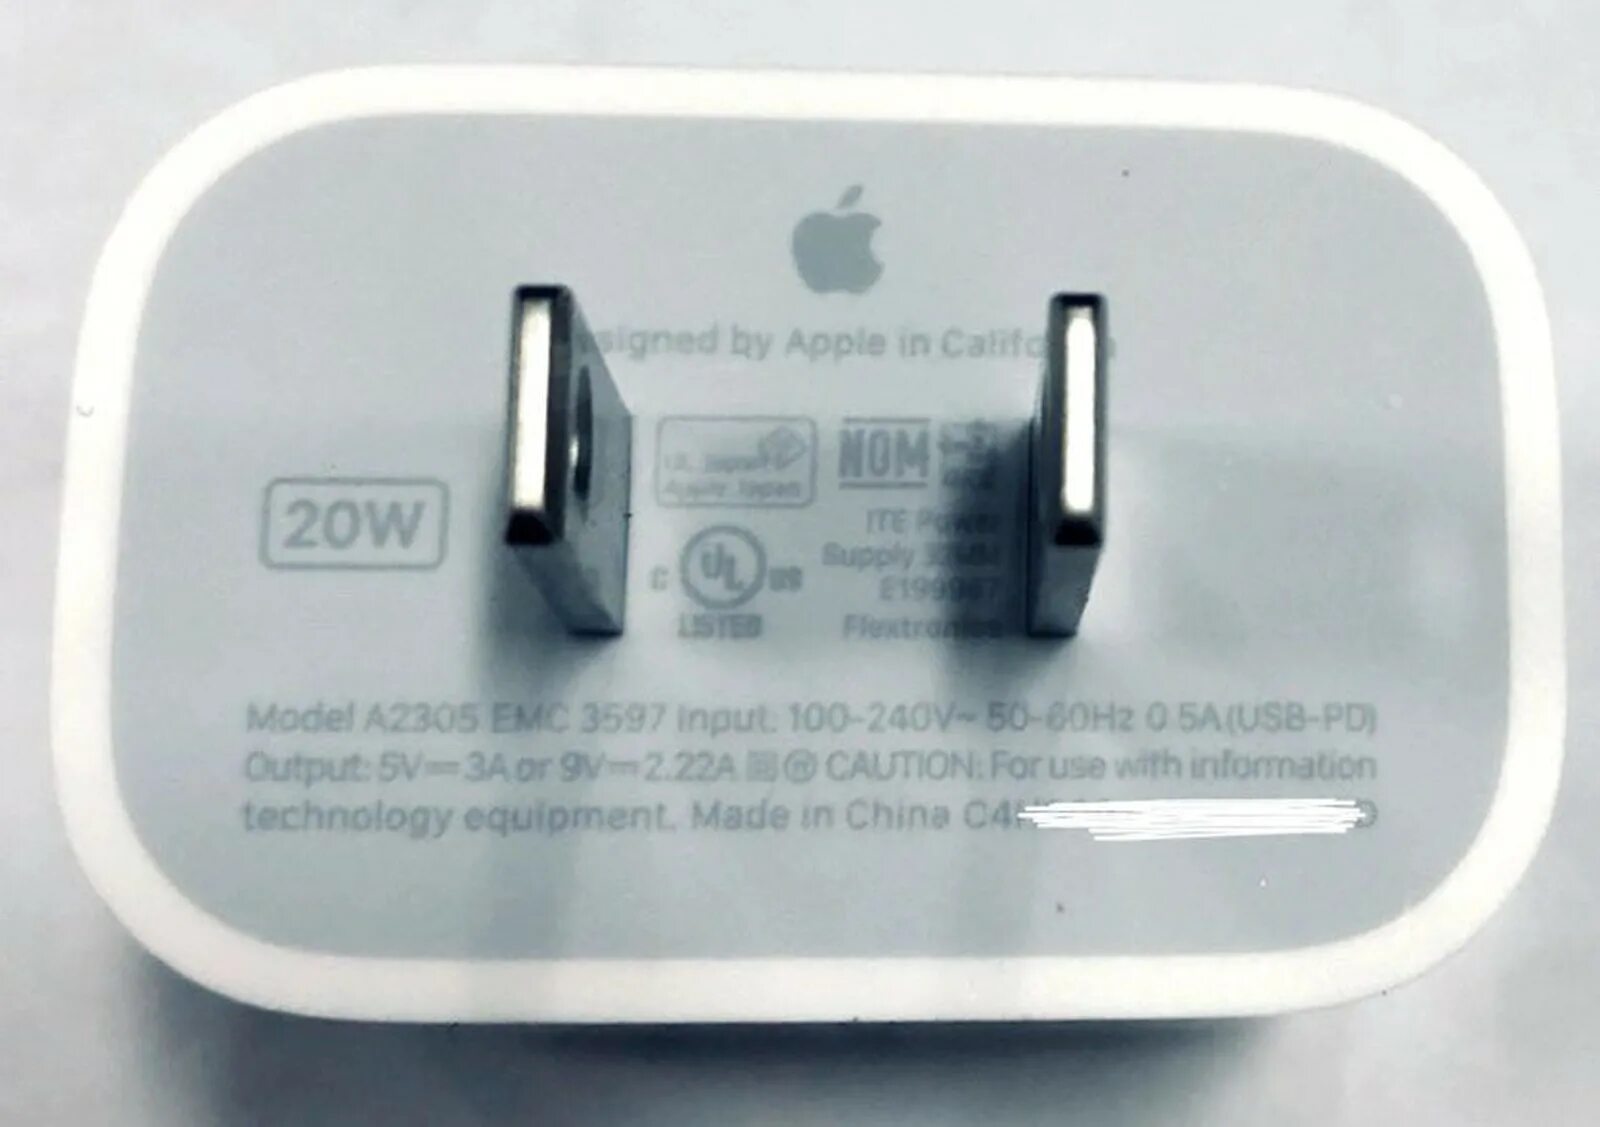 Адаптер питания Apple USB-C 20w. Адаптер питания Apple USB-C 20 Вт. Адаптер питания Apple 20w оригинал модель. Адаптер питания Apple USB C 140 Вт.